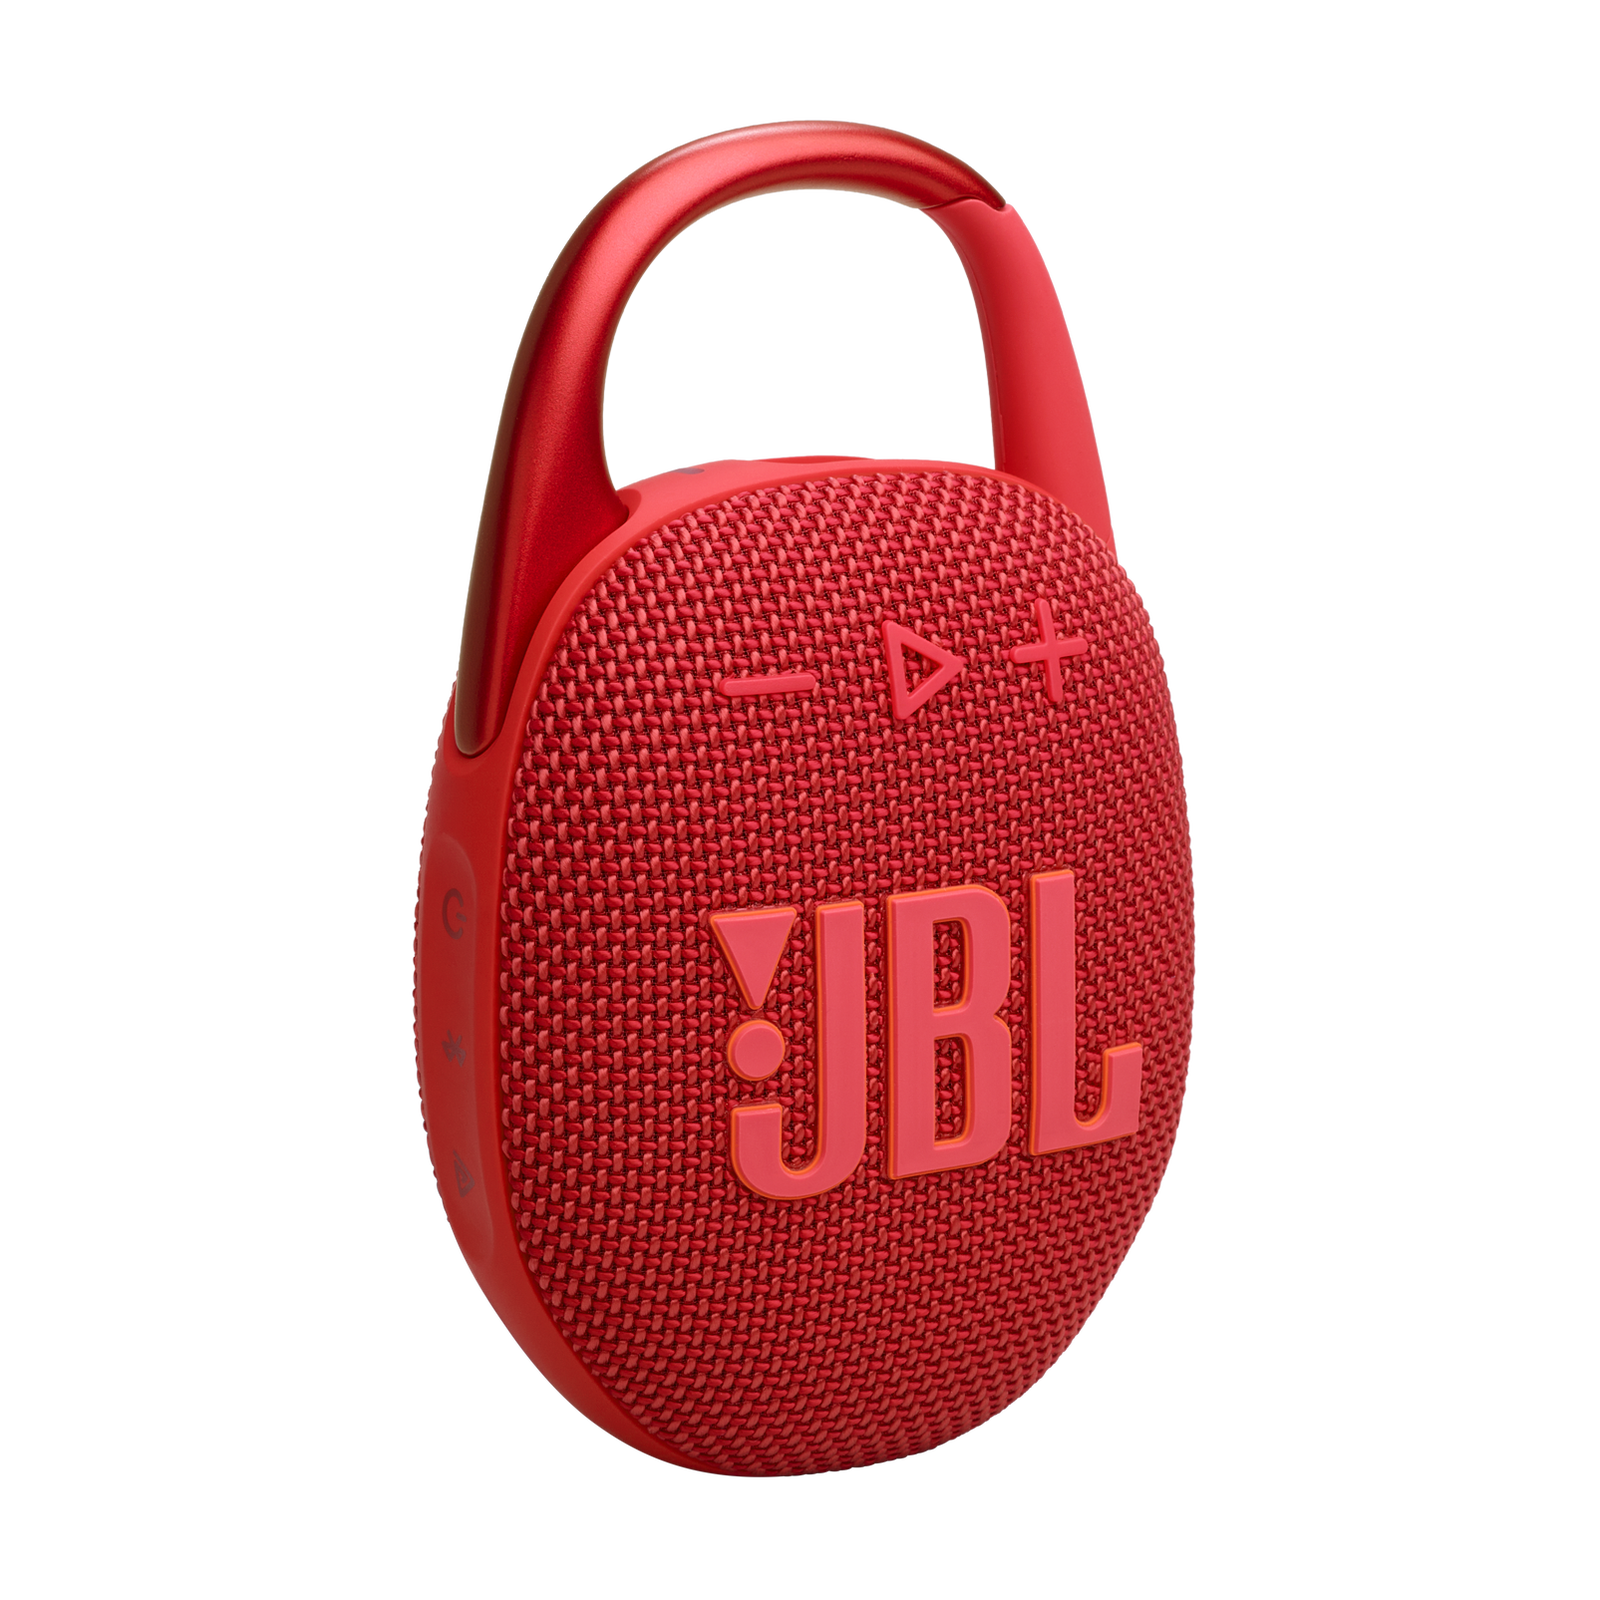 JBL Clip 5 Red Bluetooth Speaker